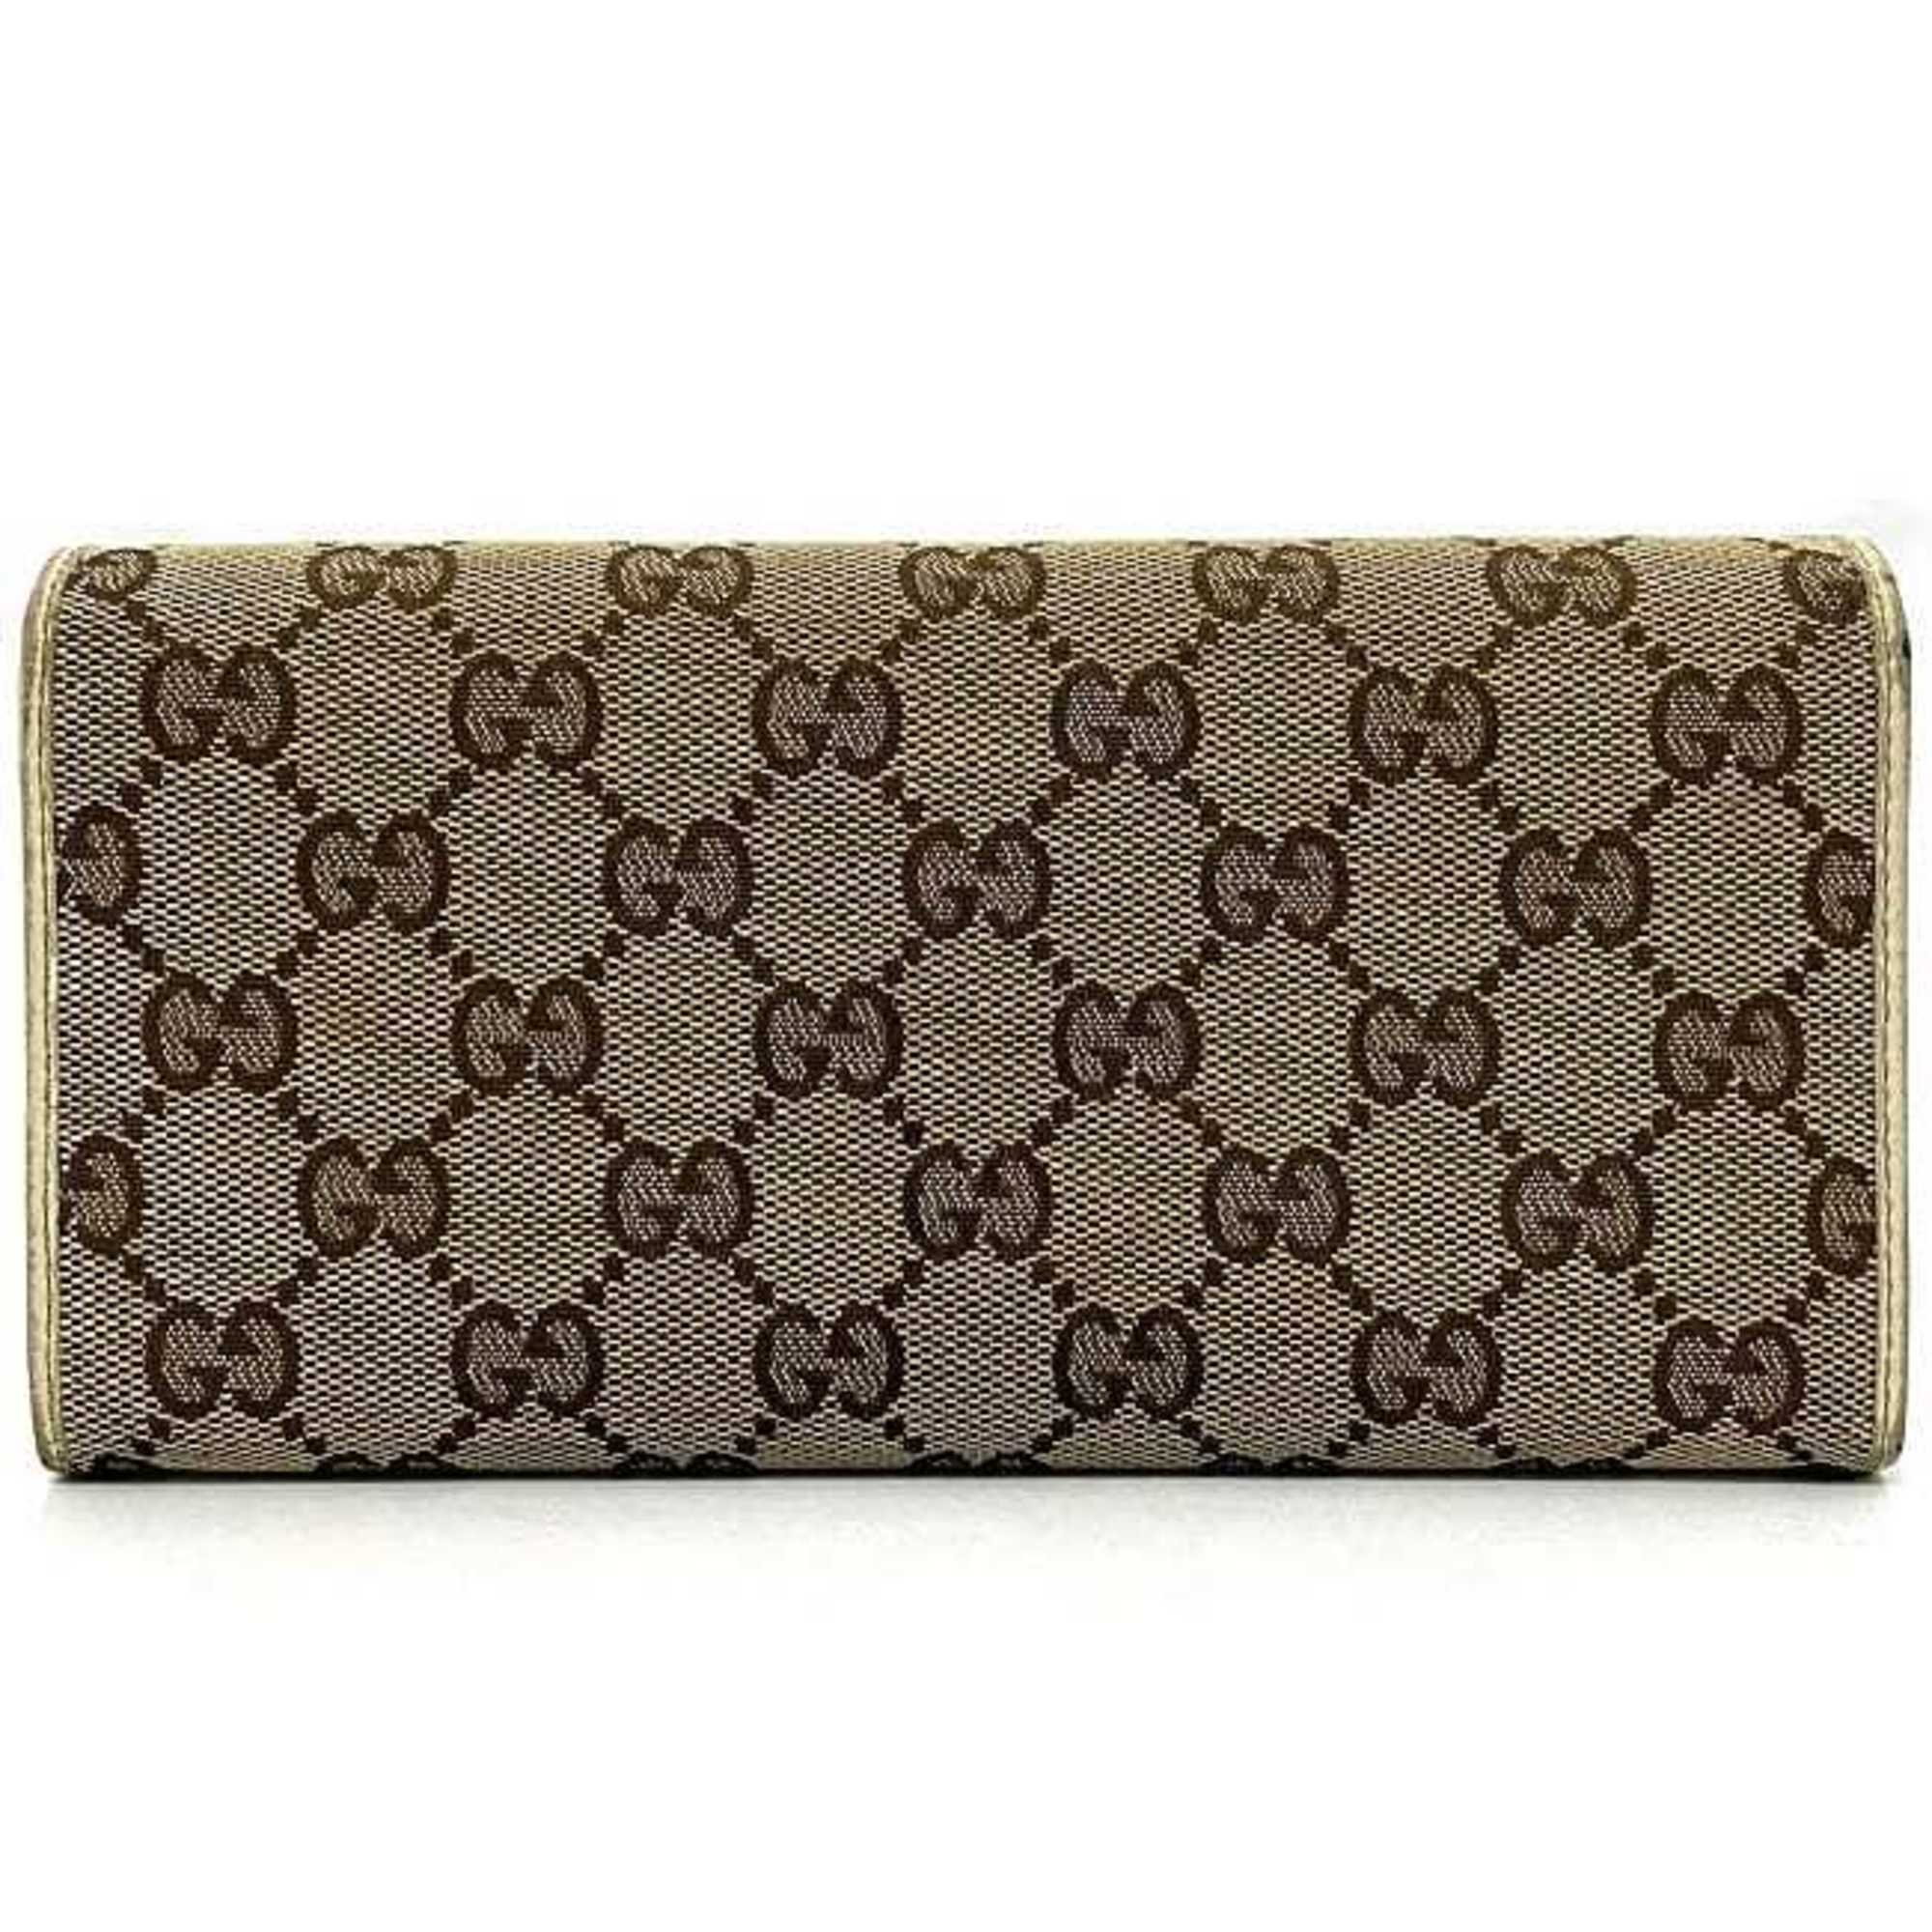 Gucci Bifold Long Wallet Beige White Brown Gold New Bullitt 204836 GG Canvas Leather GUCCI Interlocking Fold